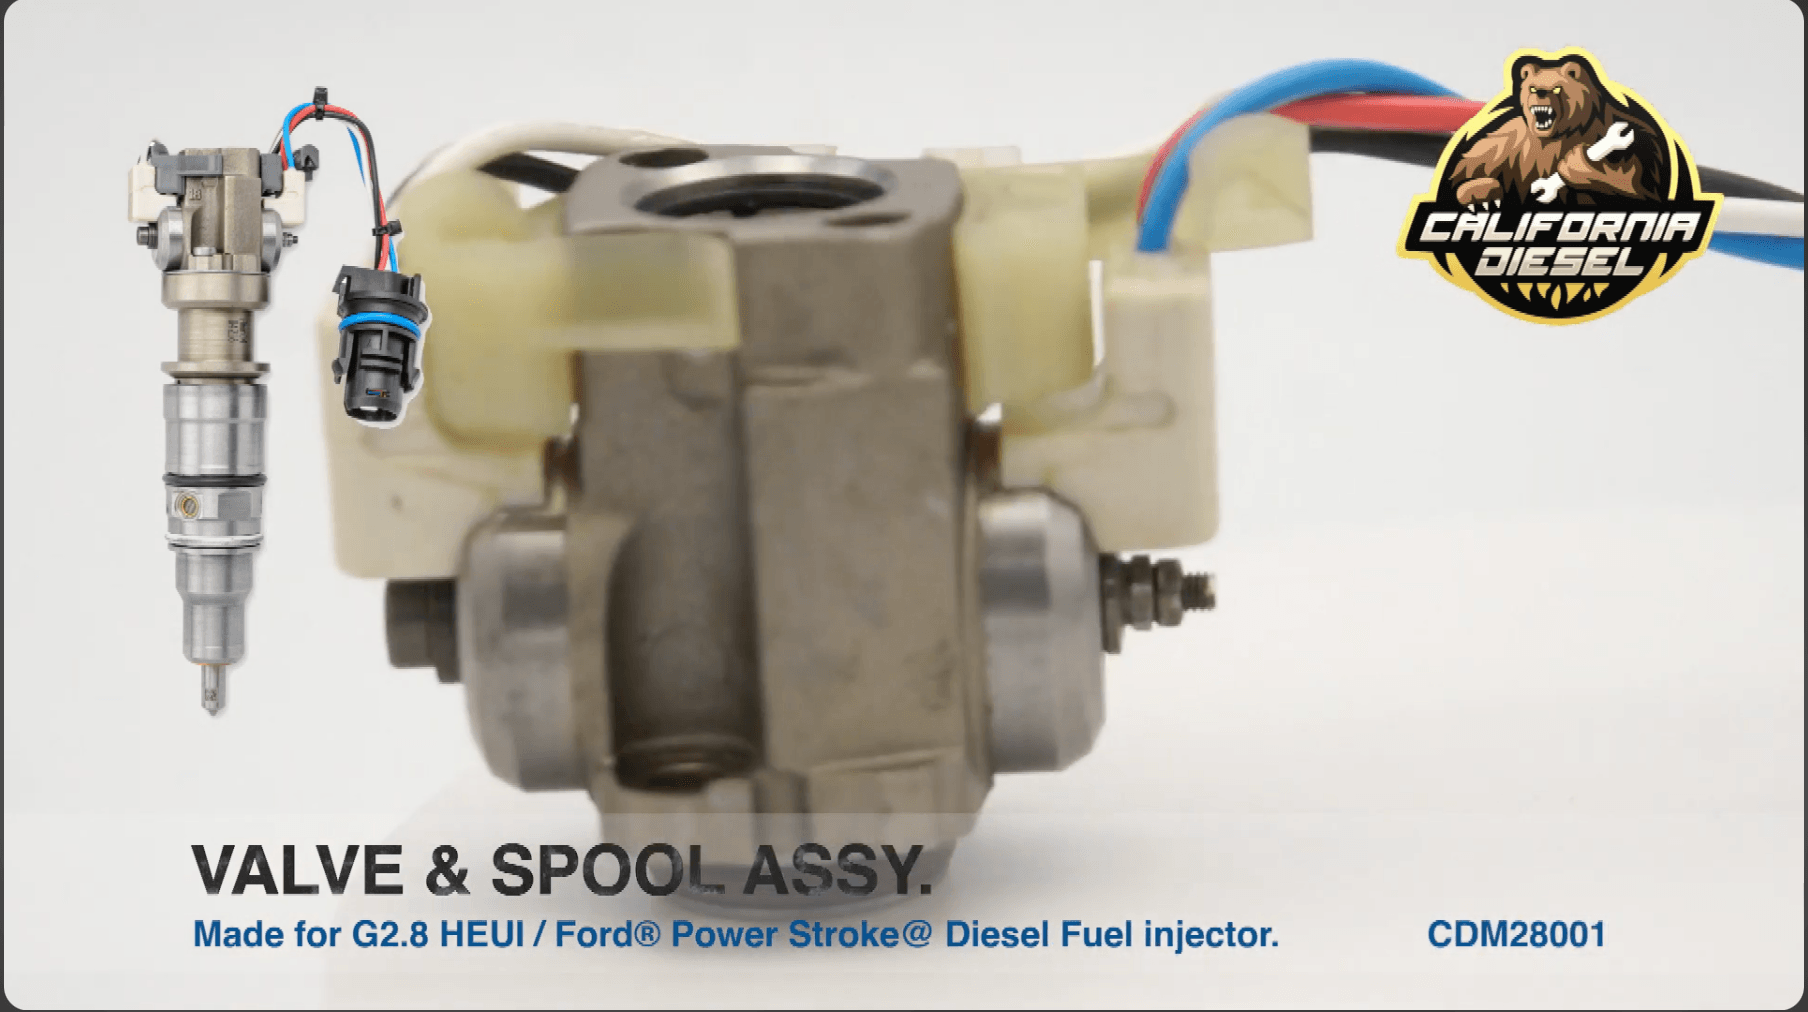 VIDEO | Valve & Spool Assy for G2.8 HEUI Injectors - California Diesel Shop